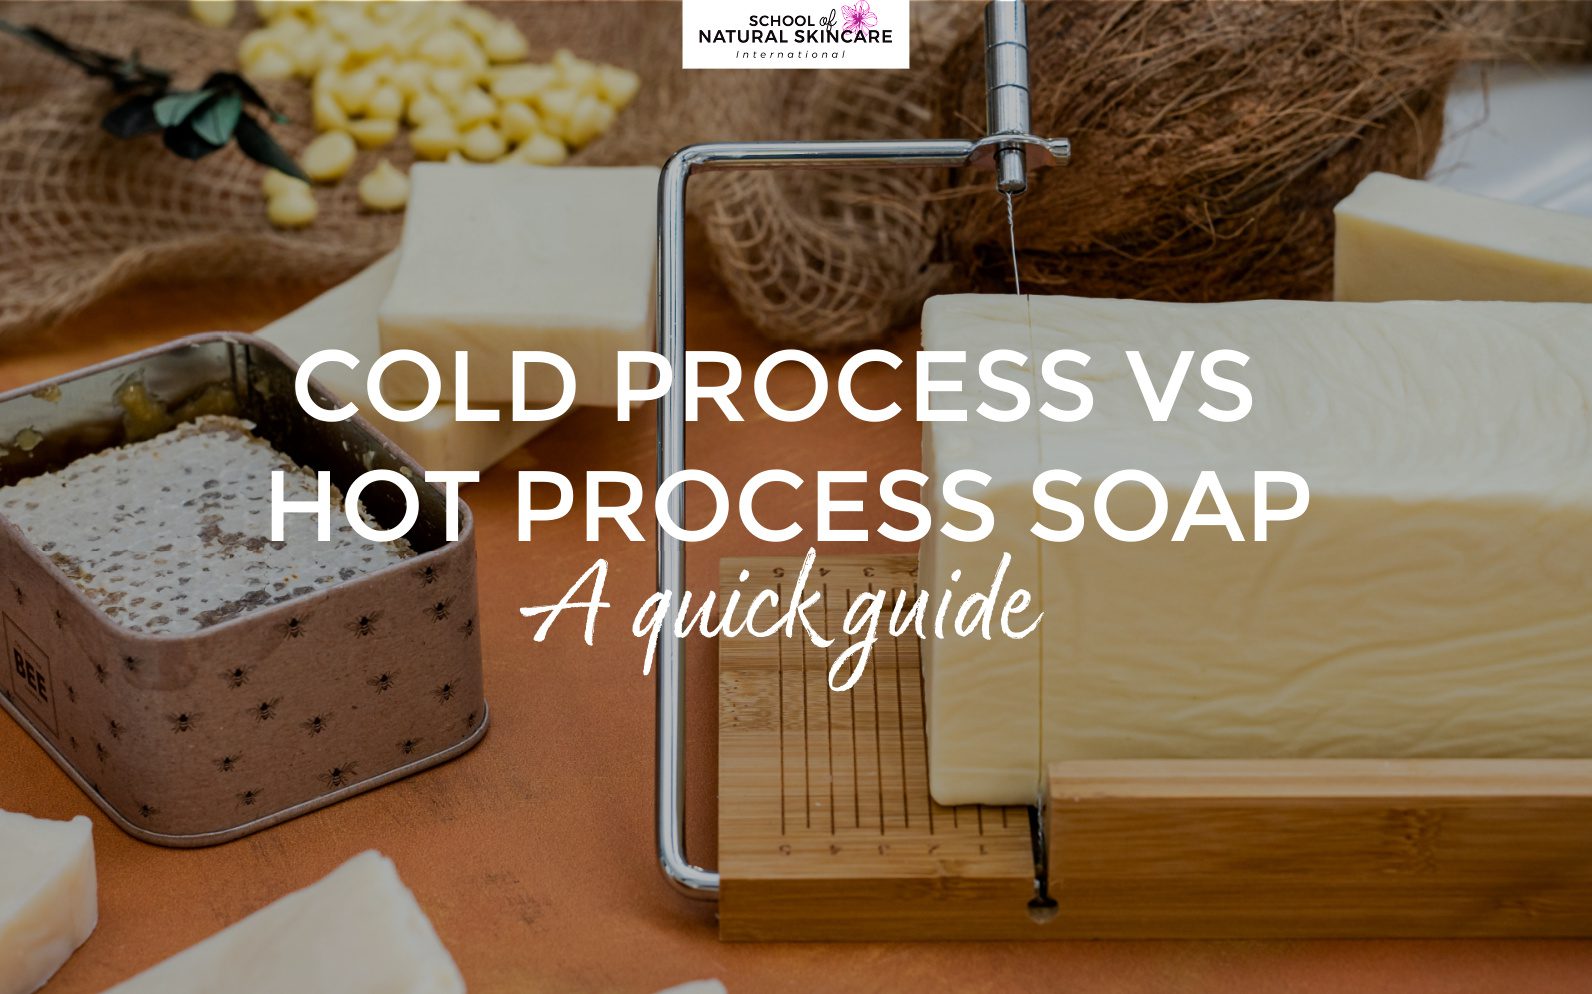 https://www.schoolofnaturalskincare.com/wp-content/uploads/2022/12/Cold-process-vs-hot-process-soap_-A-quick-guide.jpg